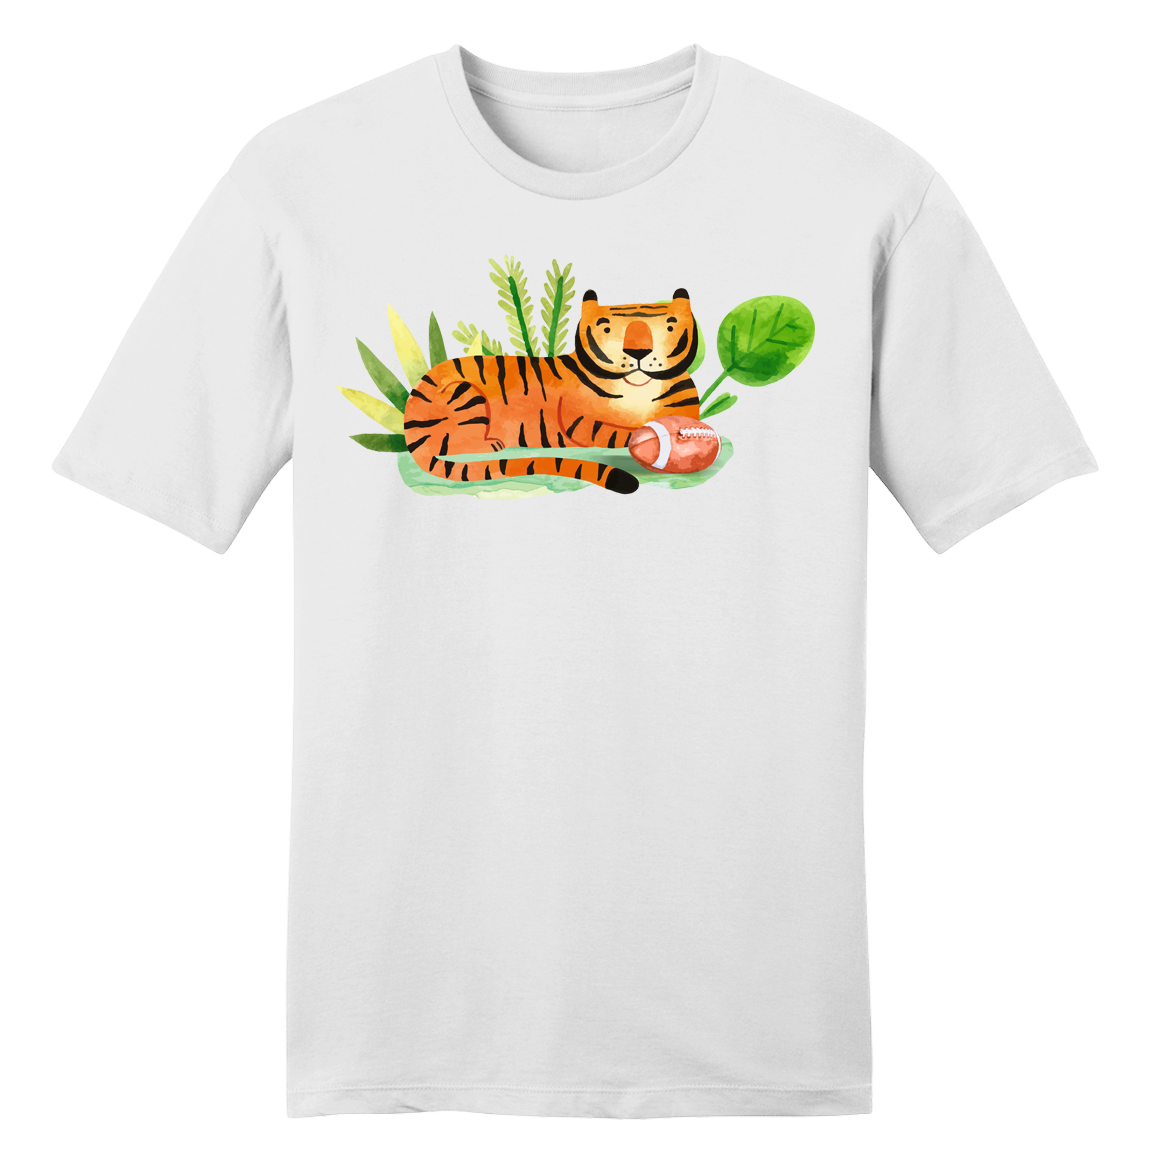 Youth Bengal Tiger Football T-shirt